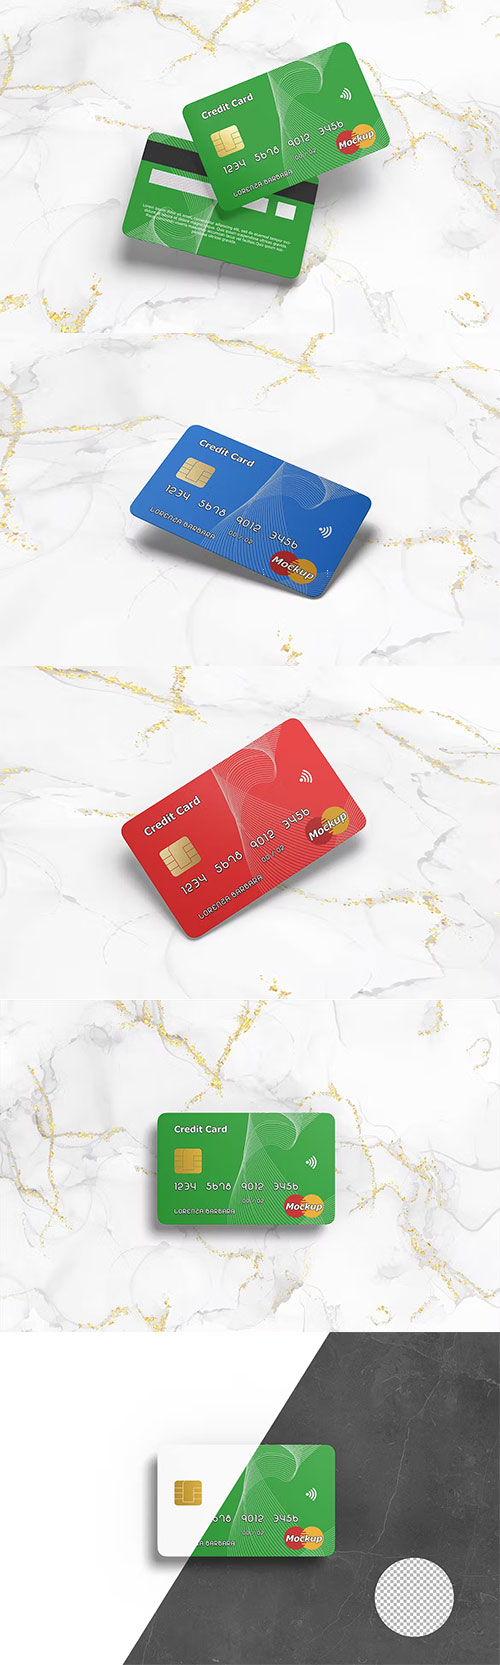 Realistic Credit Card Mockup 5VS2PJ6